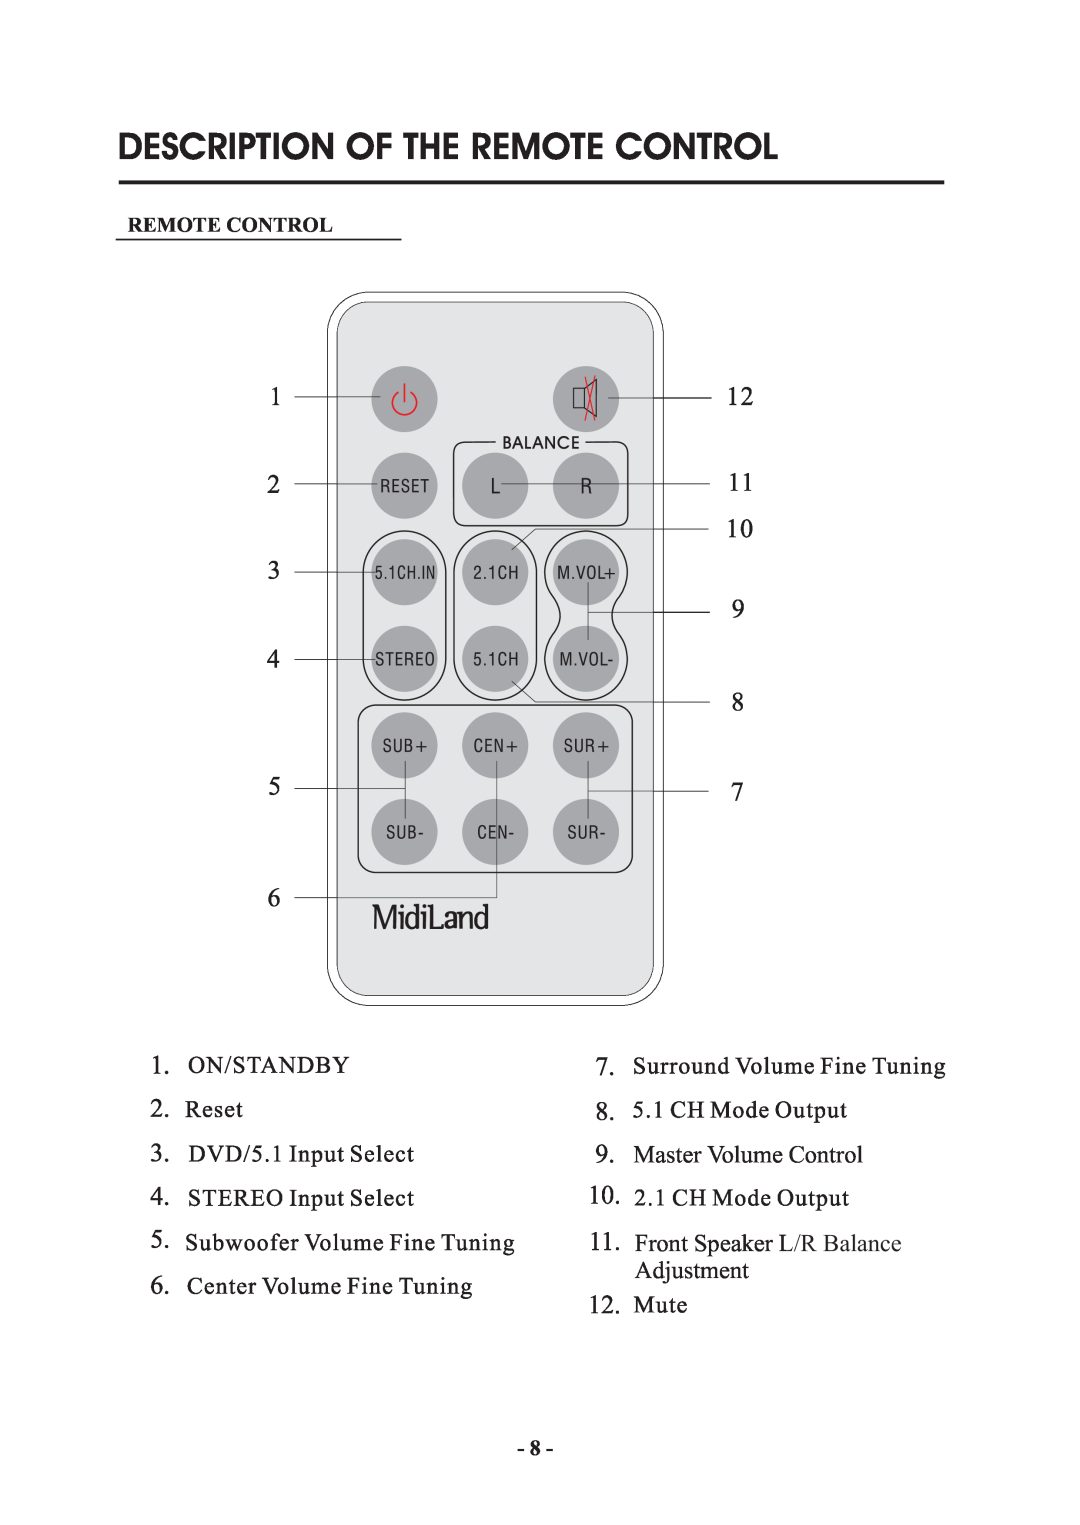 MidiLand 750 manual Description Of The Remote Control, Master Volume Control Front Speaker L/R Balance, Adjustment 